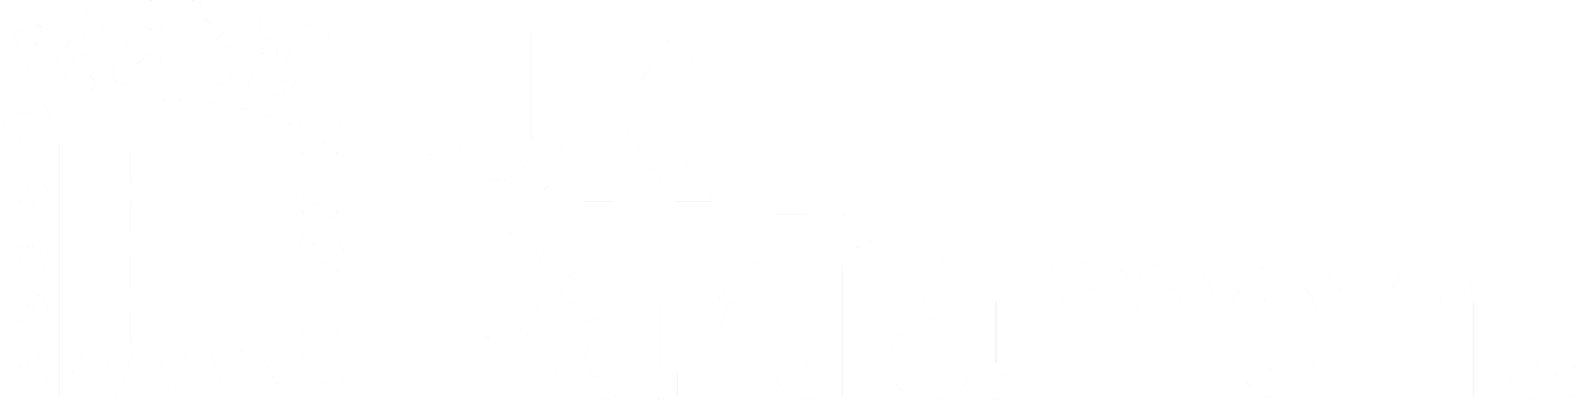 UK Parliament logo bg remove